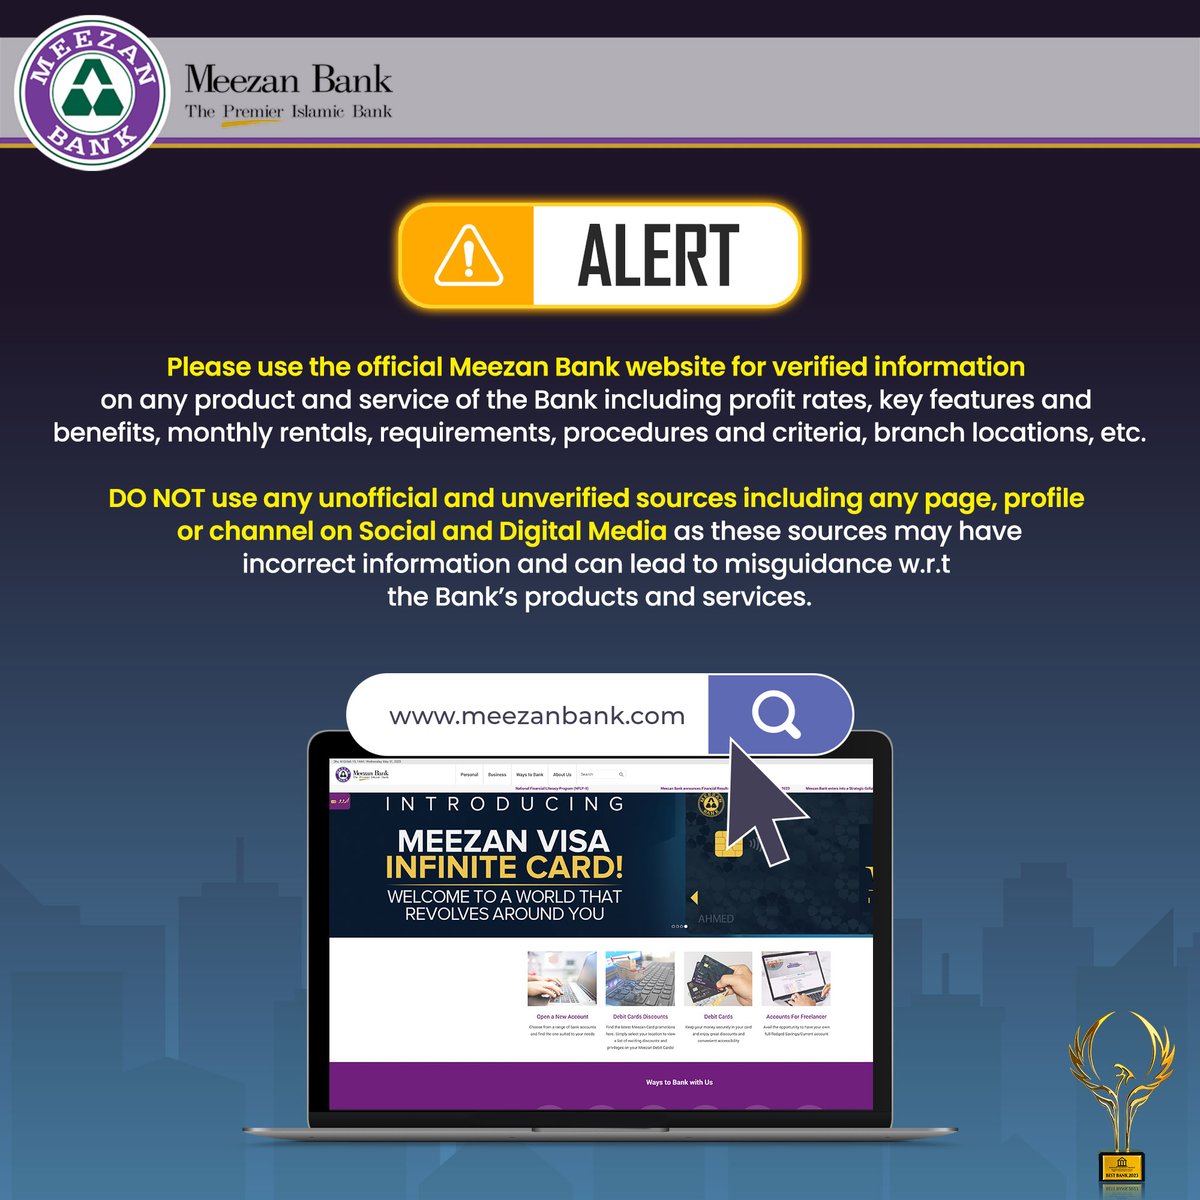 Important Alert!

#MeezanBank #IslamicBanking #IslamicFinance #Alert